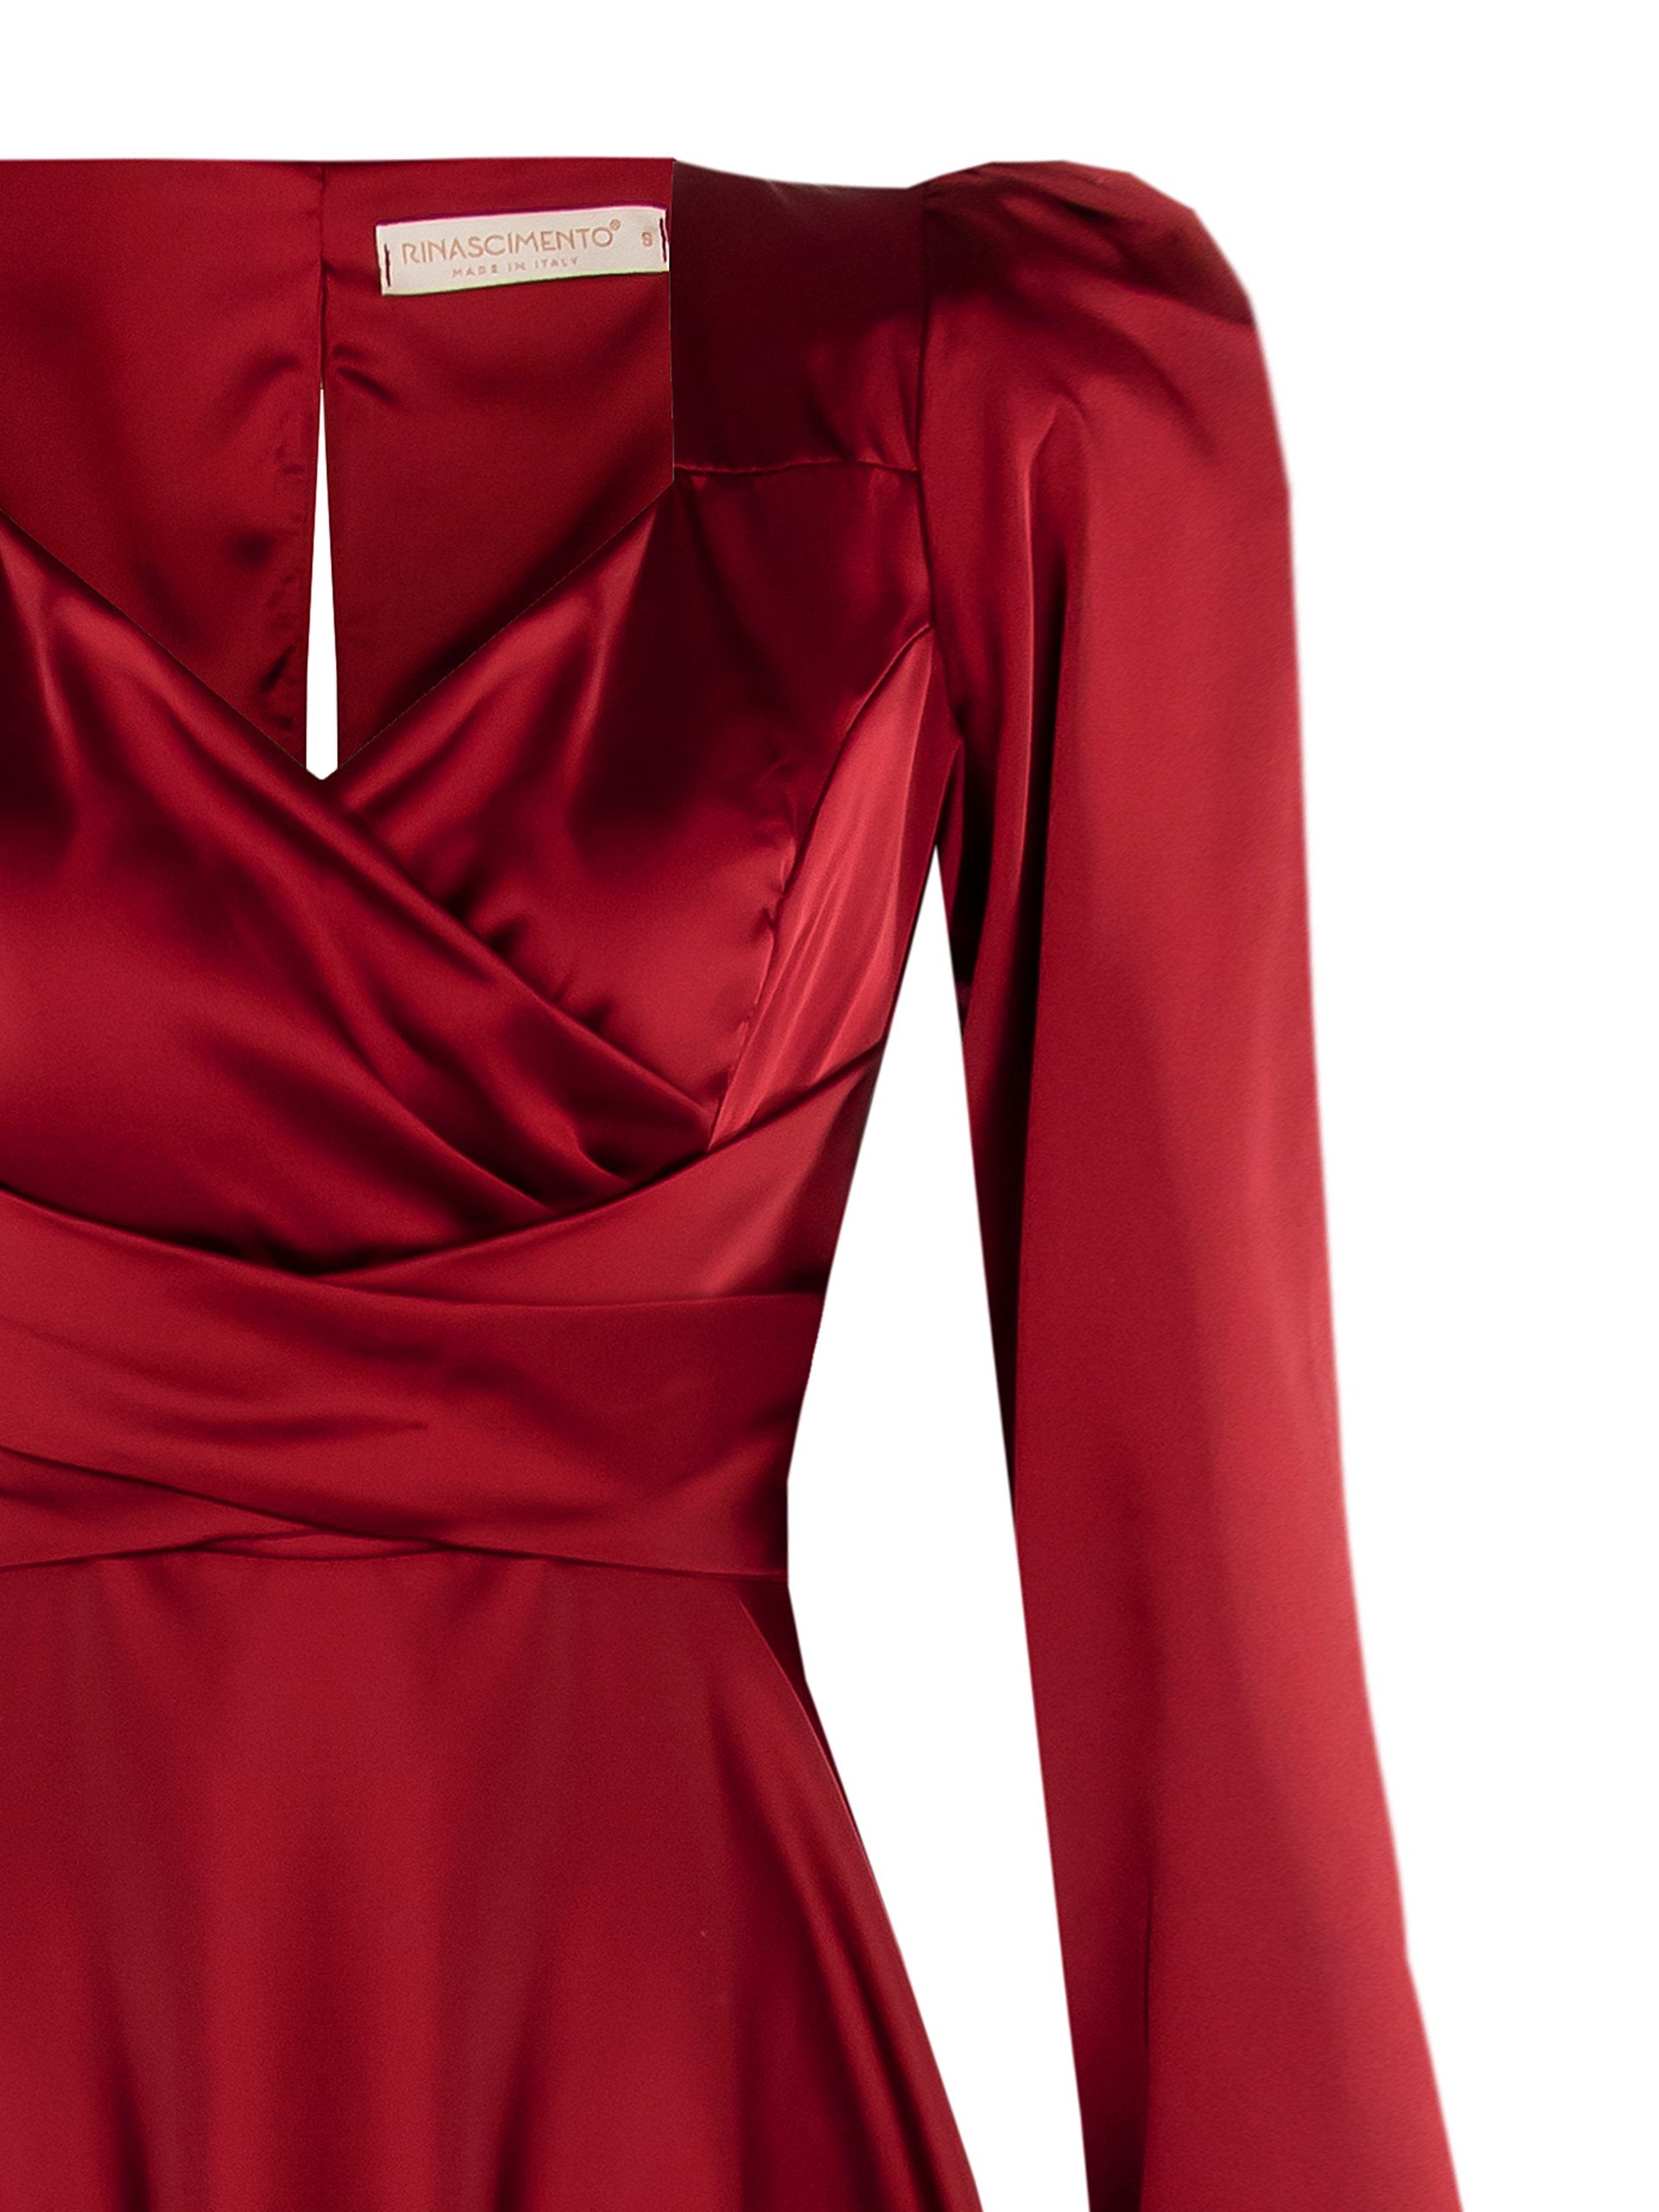 CHANTAL Long Sleeve Red Maxi Dress